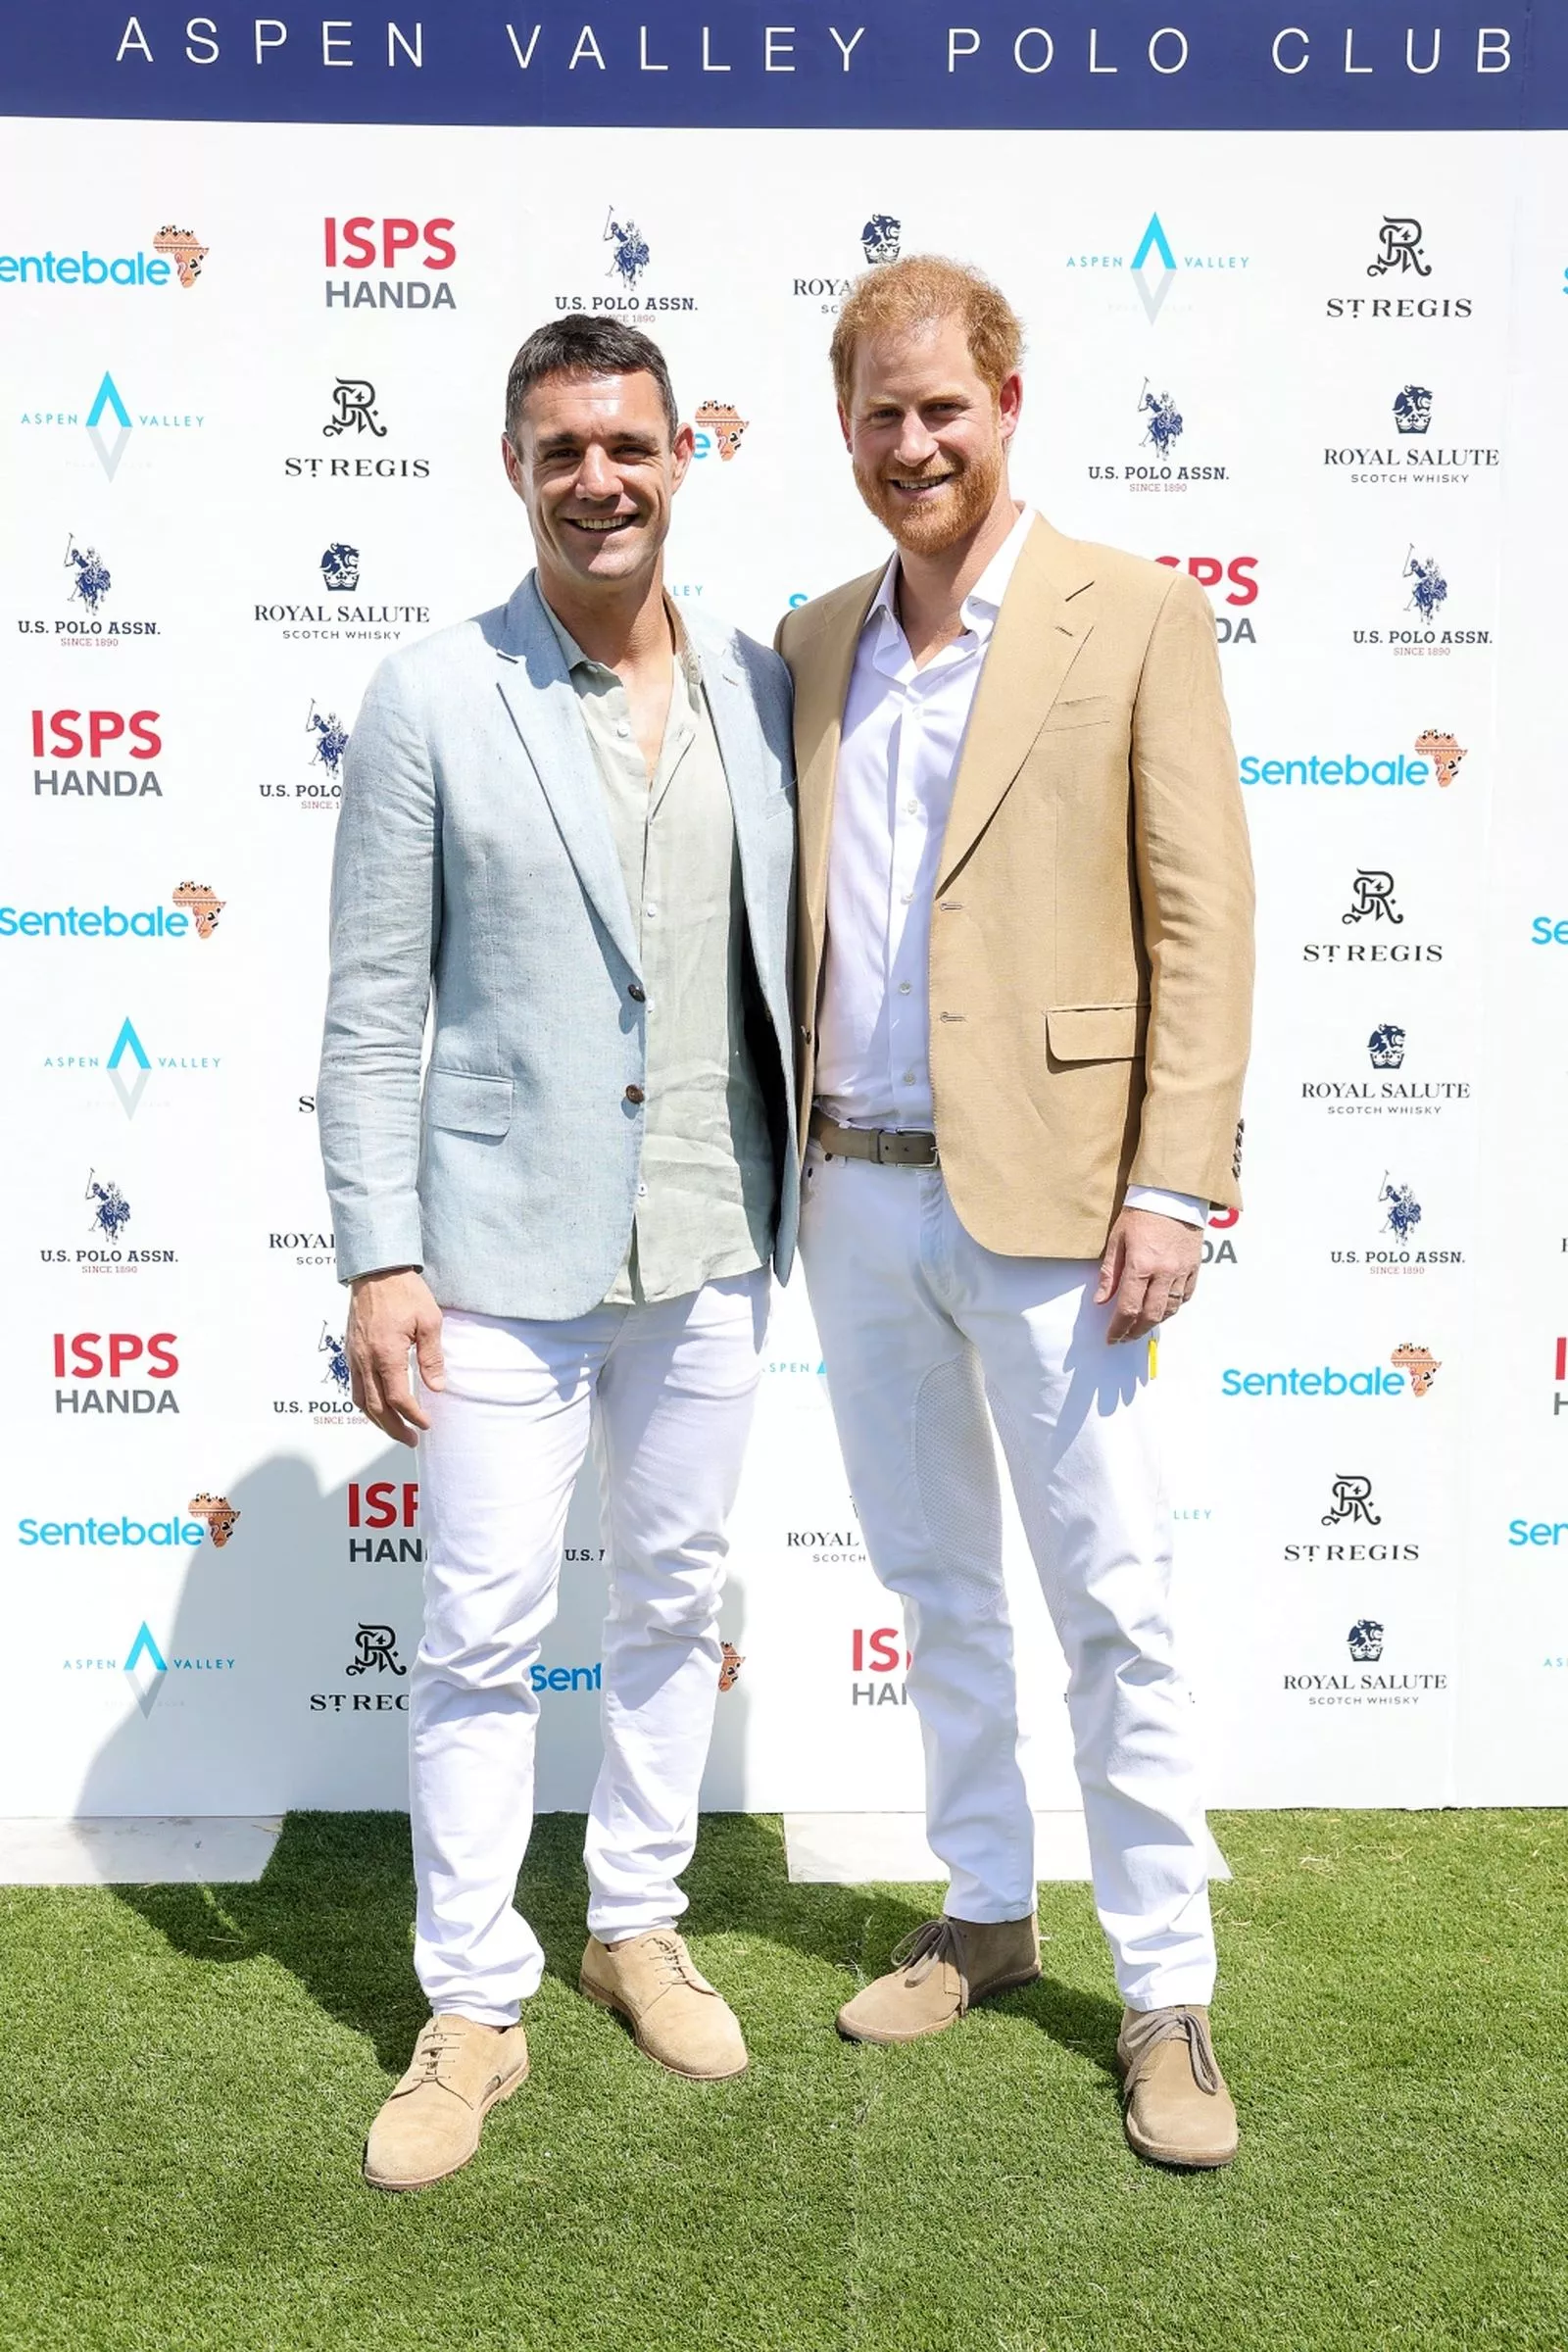 Посол ISPS Handa Дэн Картер и принц Гарри, герцог Сассекский, на турнире Sentebale ISPS Handa Polo Cup 2022 в Аспене, 25 августа 2022 г.